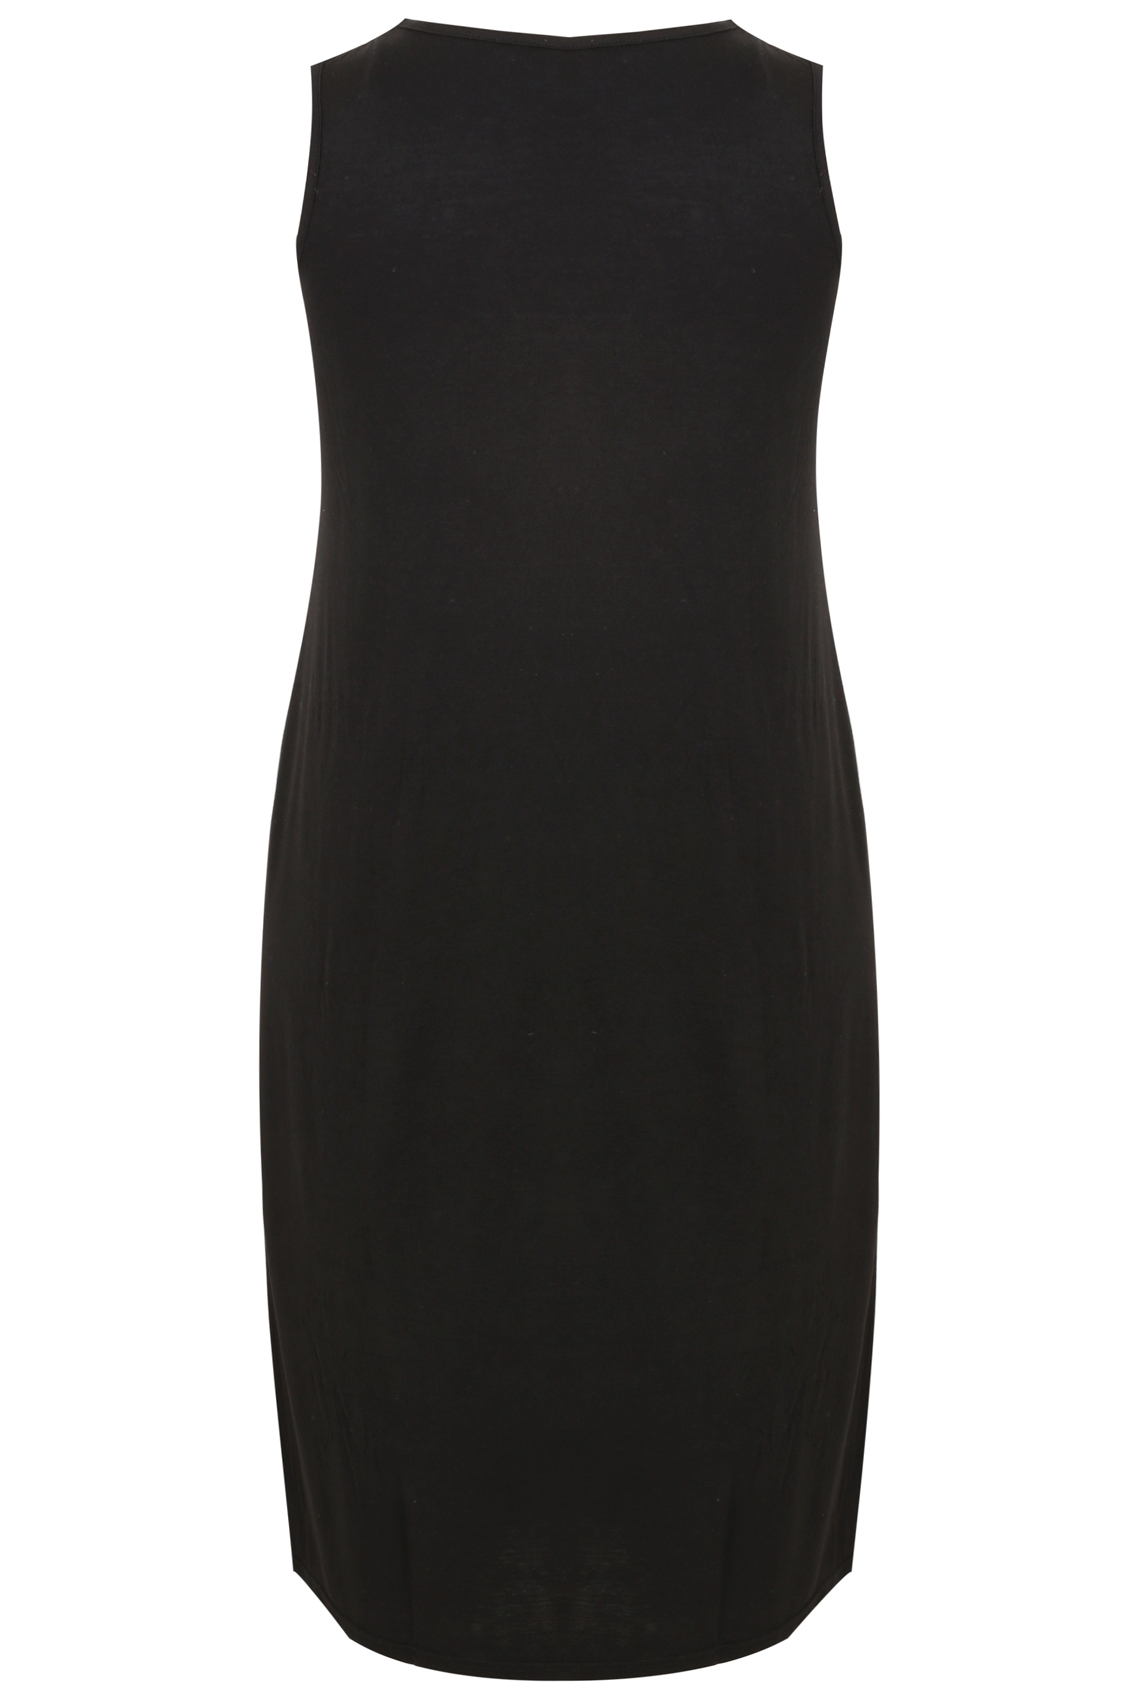 Black Longline Nightdress With Neckline Lace Detail, Plus Size 14 to 36